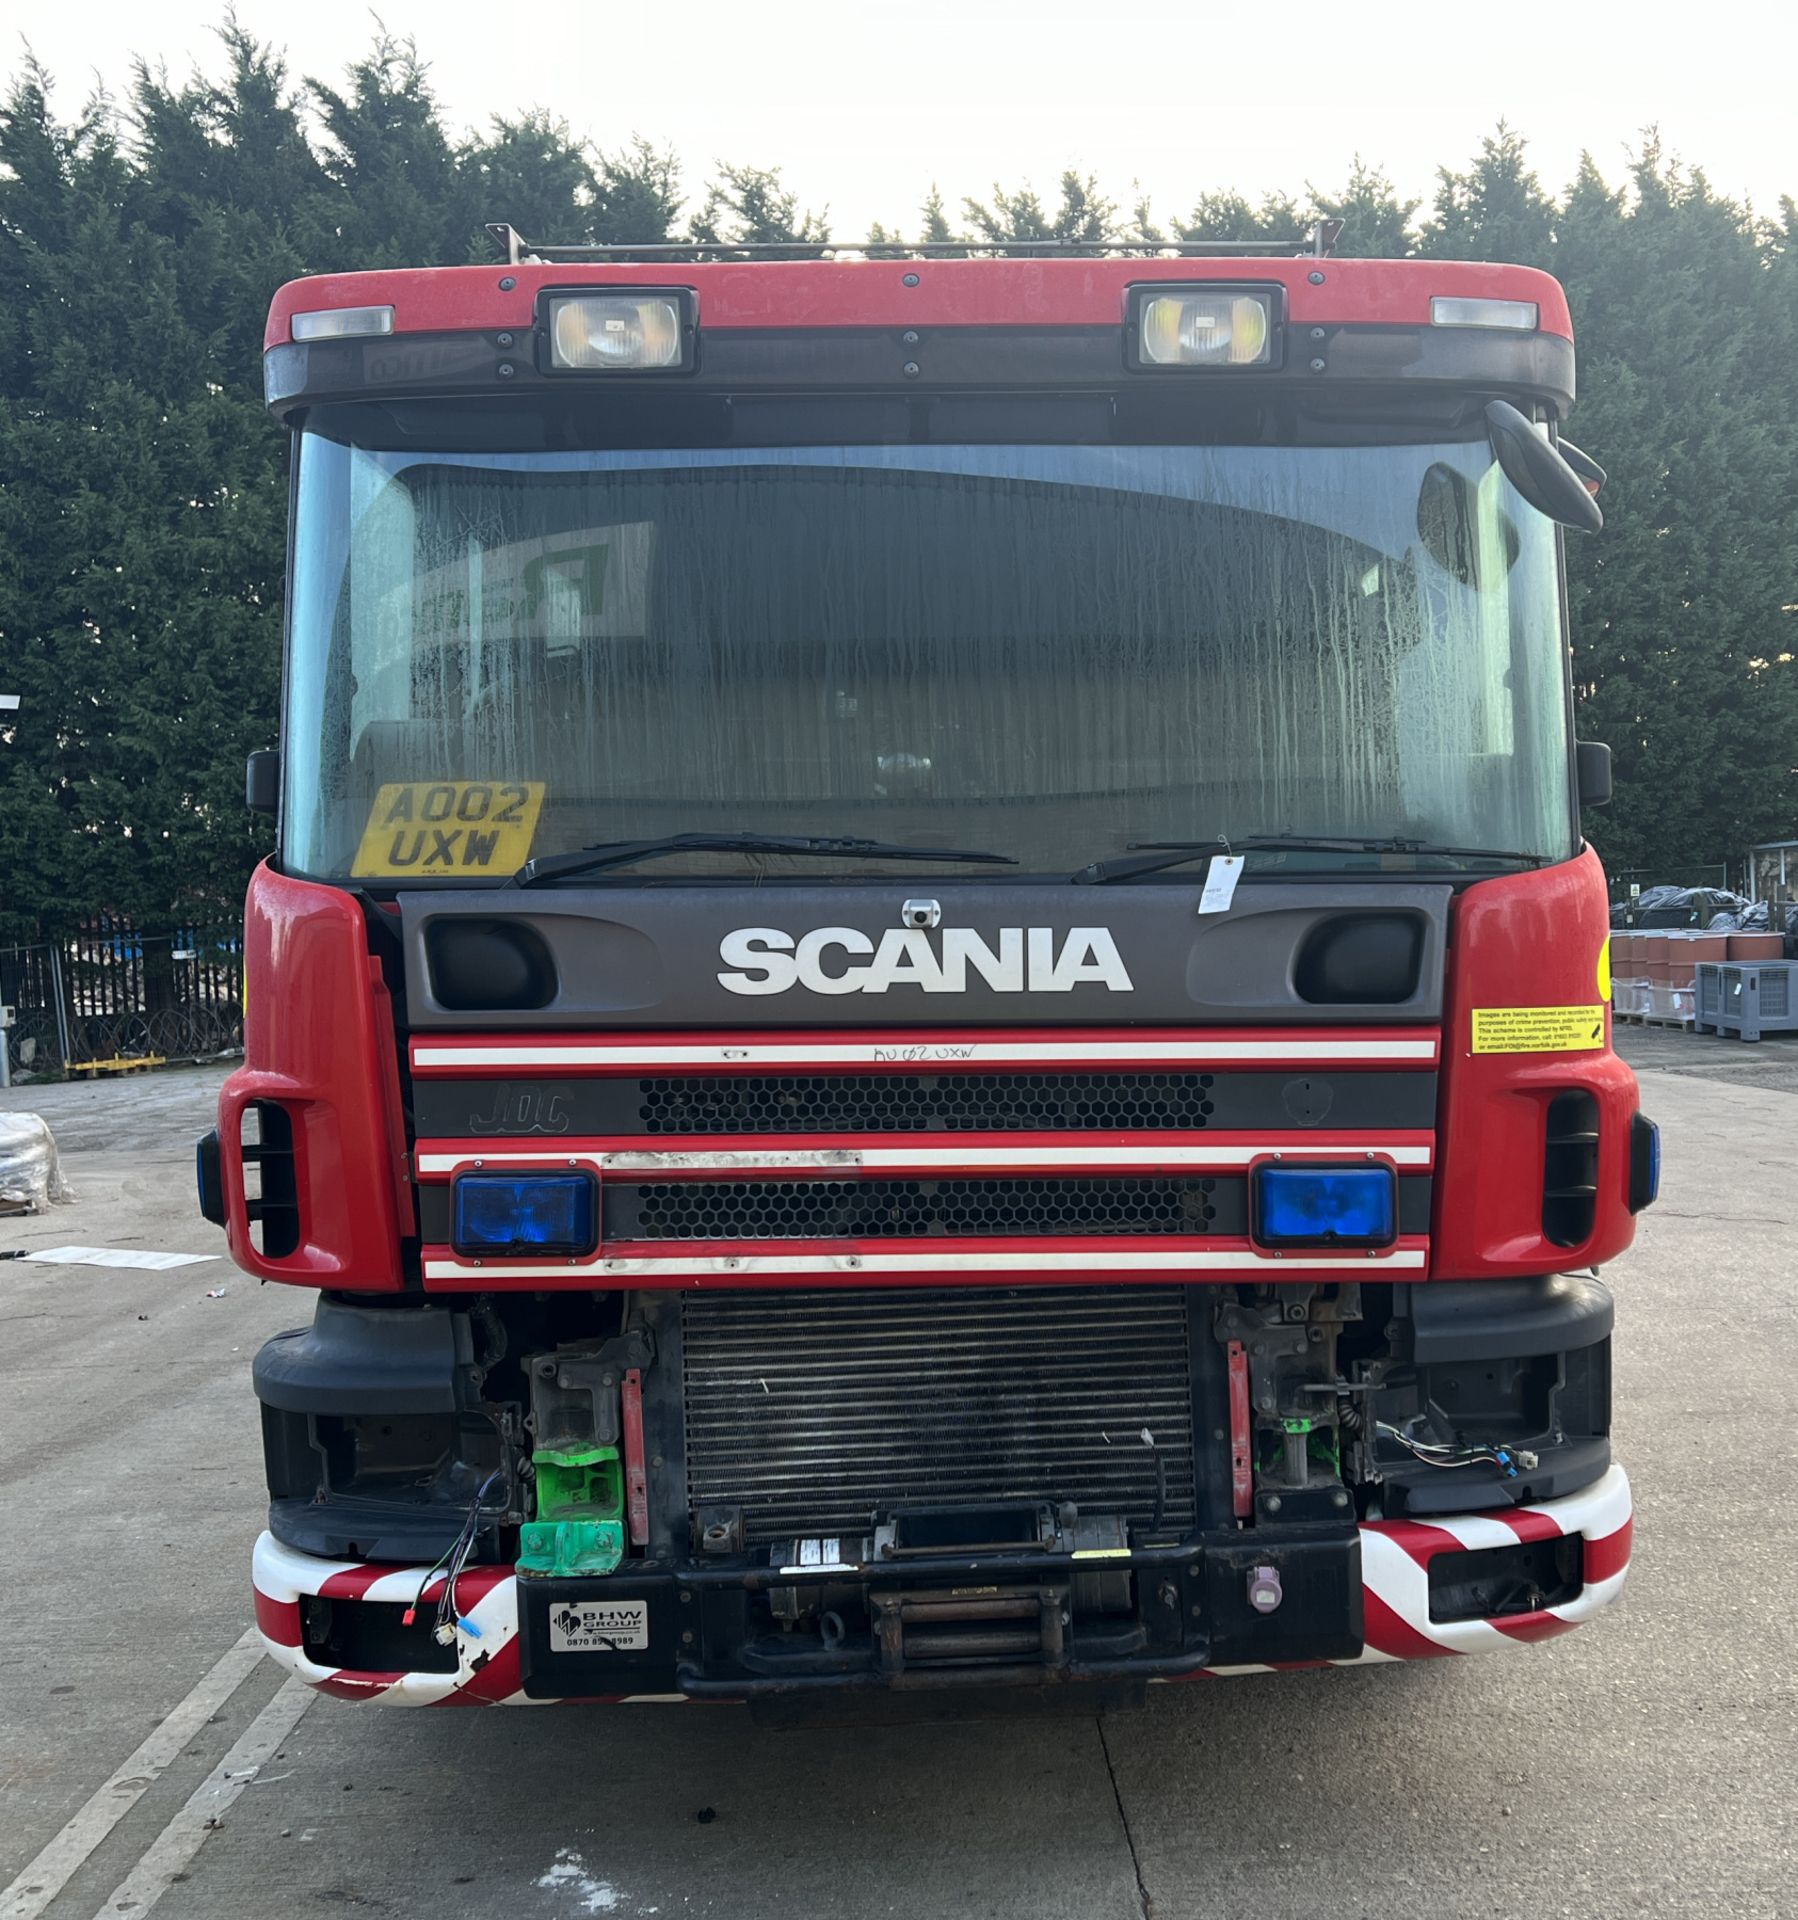 Scania JDC fire engine - 2 axel rigid body - A002 UXW - 230909 km - V5 present - Image 4 of 54